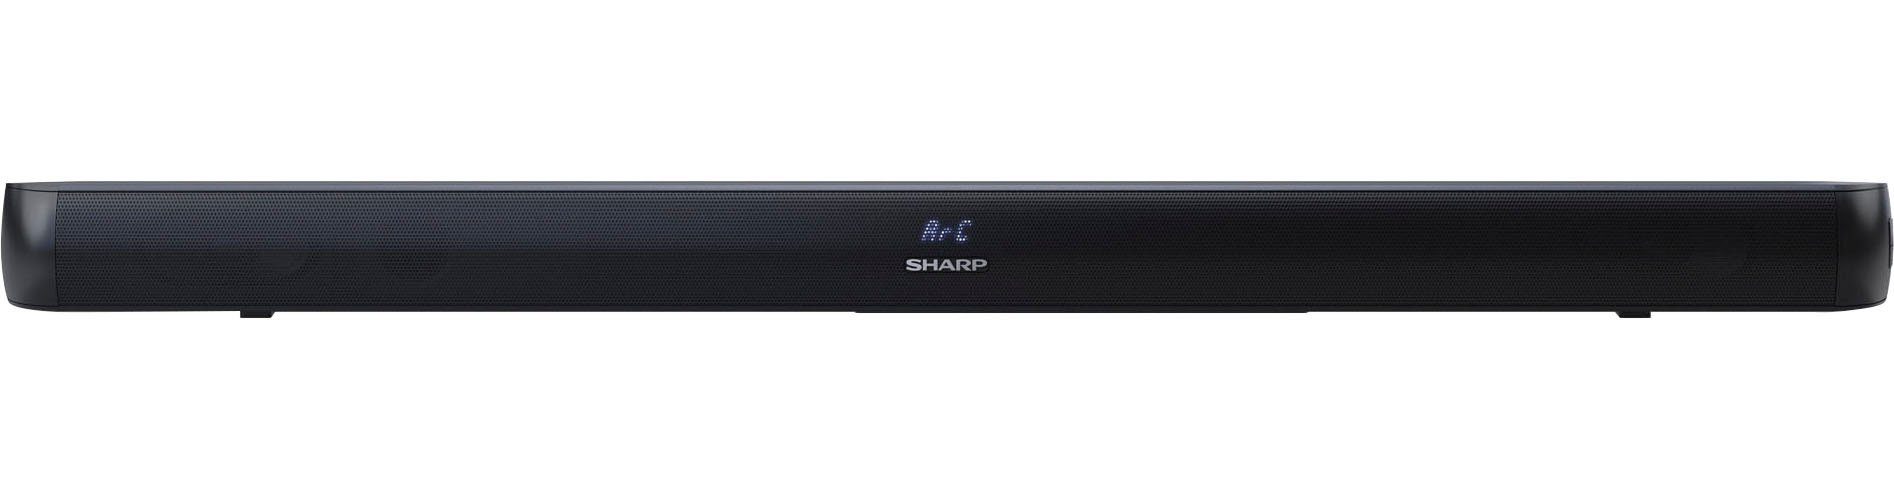 Sharp HT-SB147 Soundbar Stereo (Bluetooth)